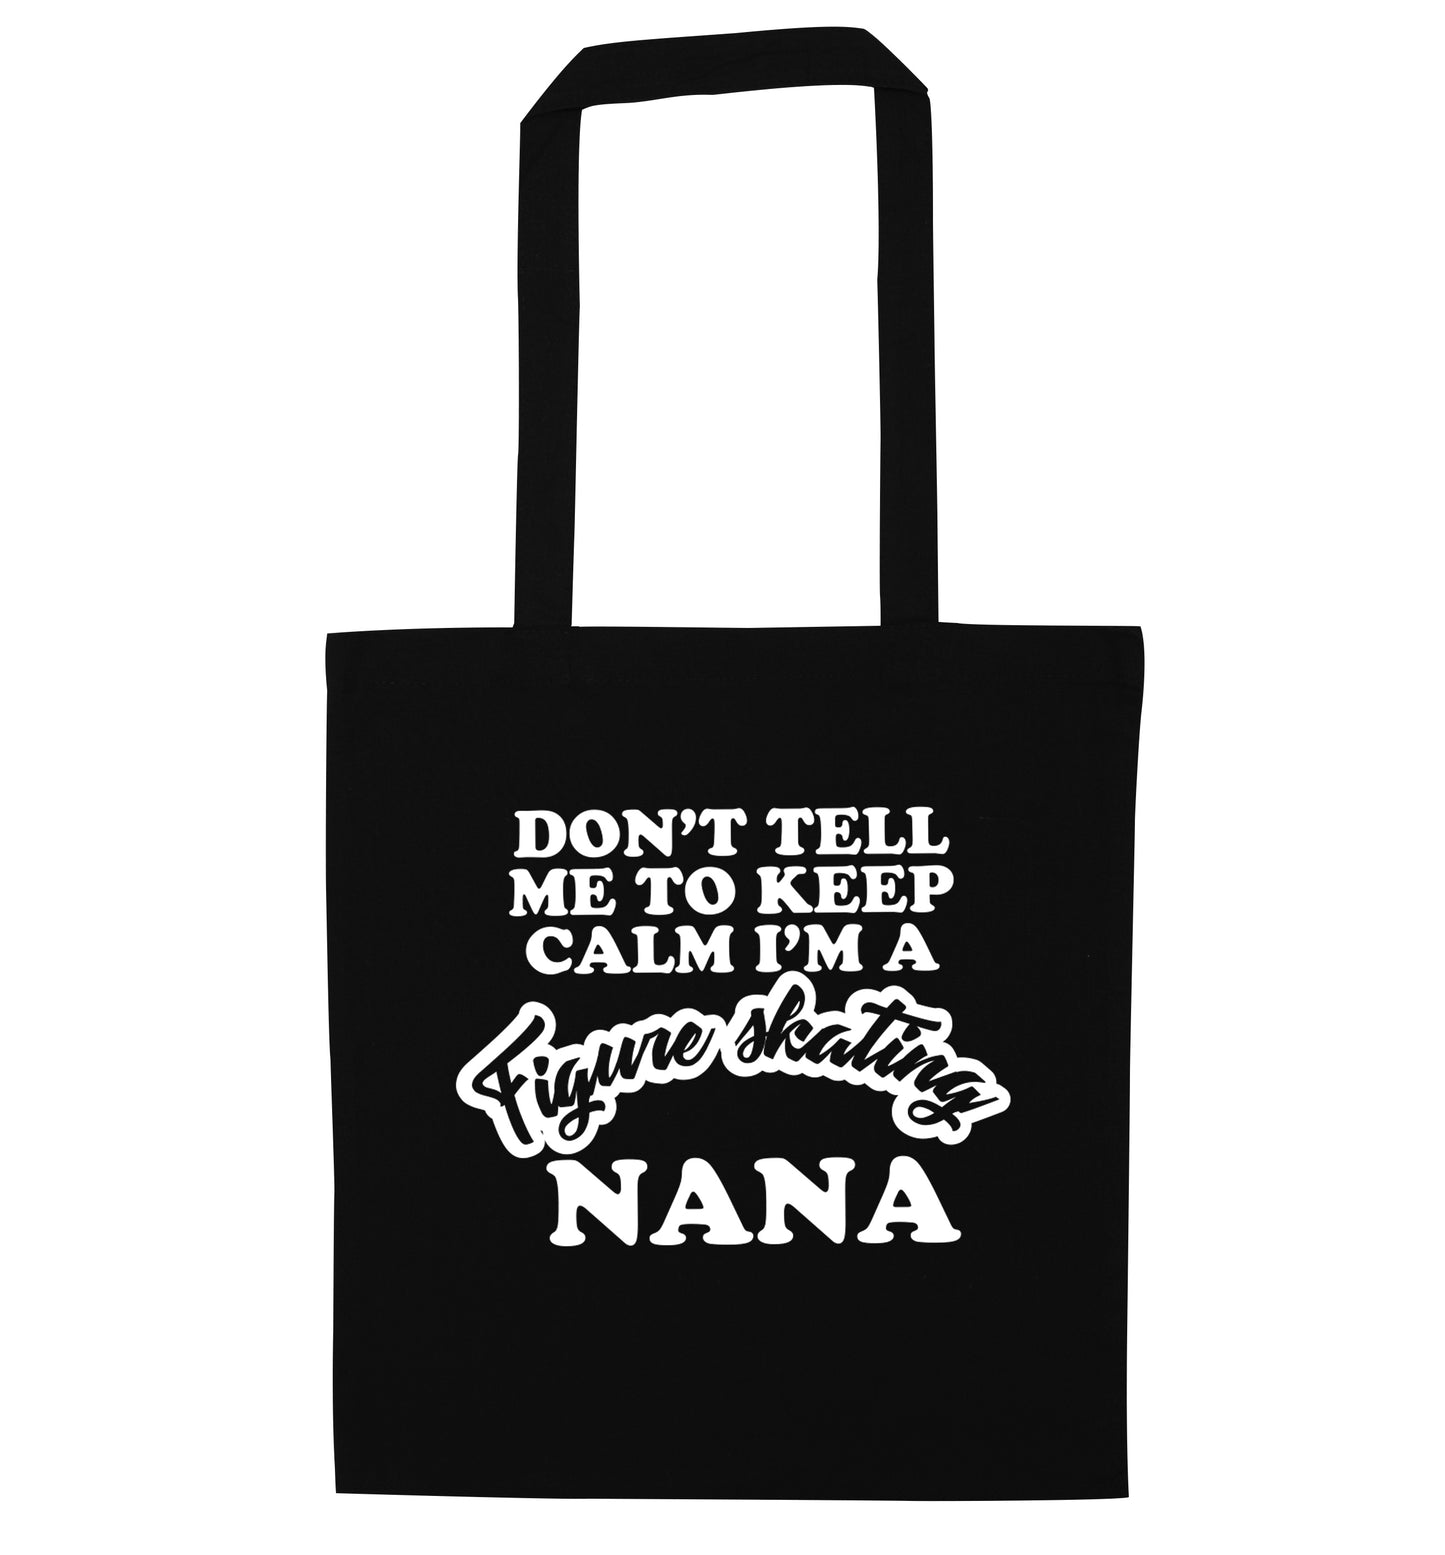 Don't tell me to keep calm I'm a figure skating nana black tote bag